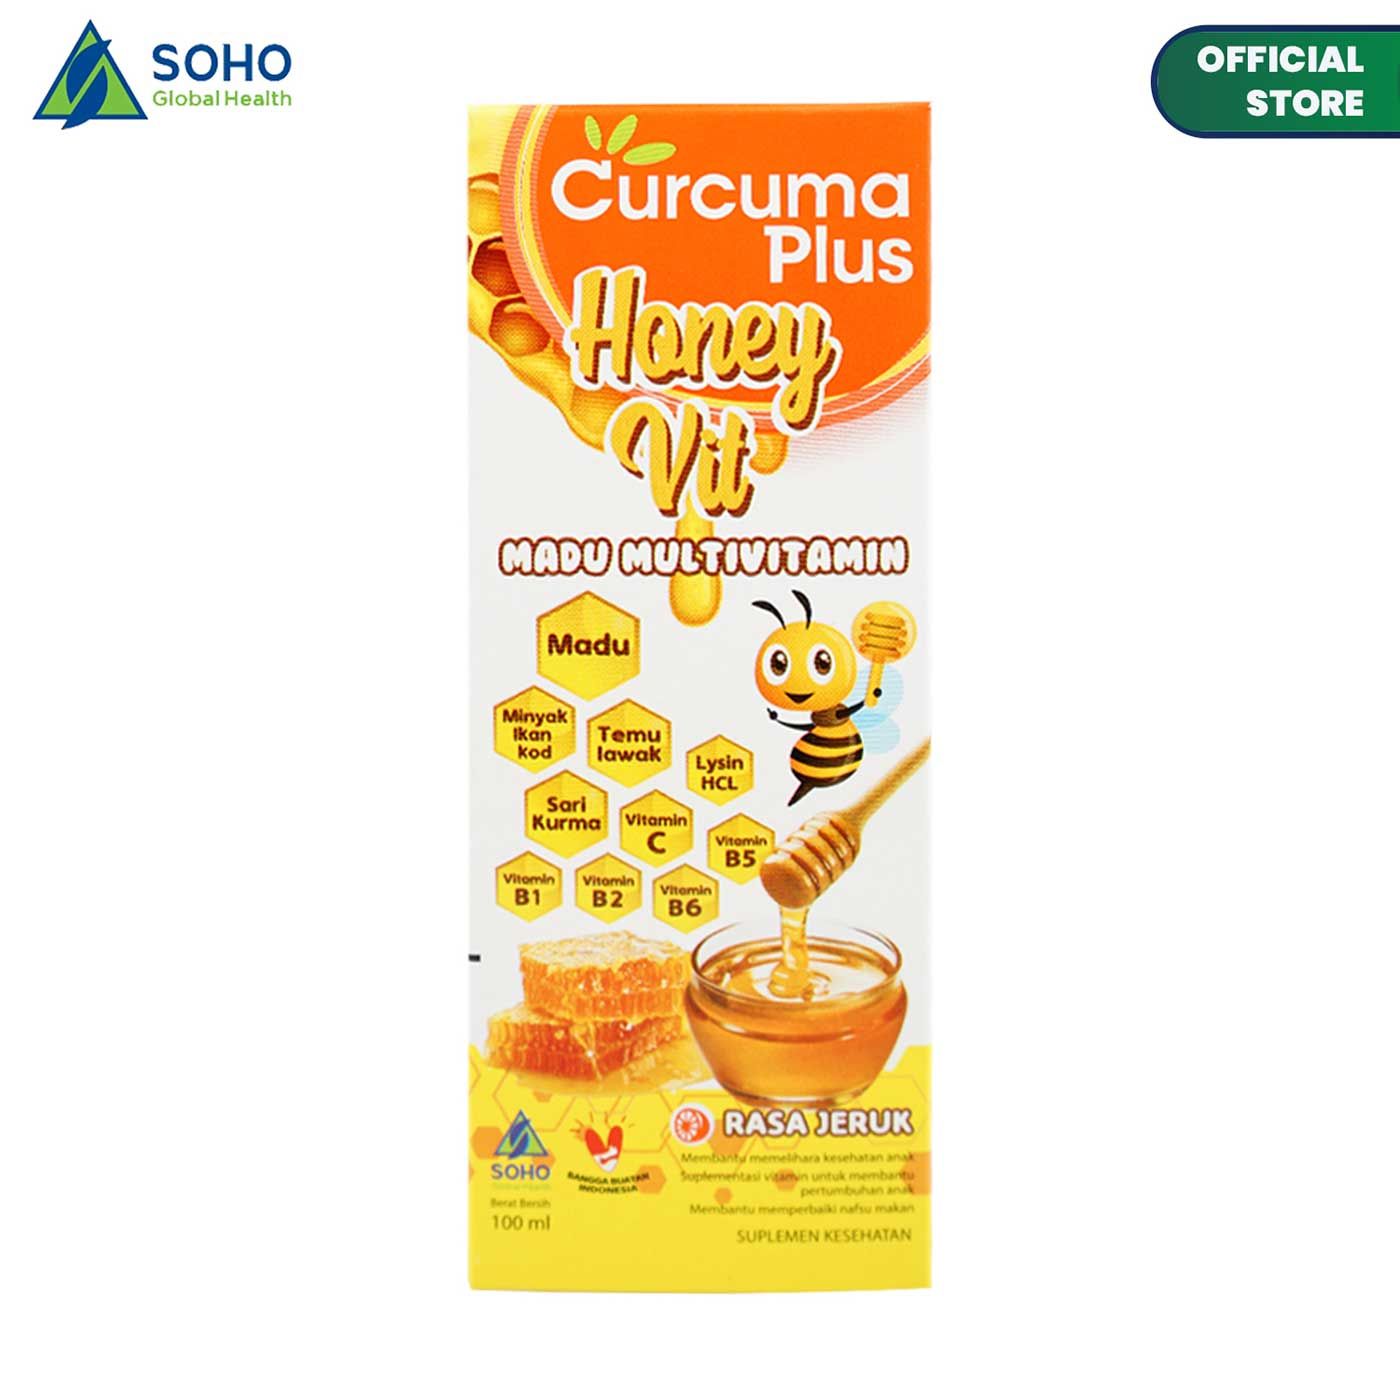 Curcuma Plus Honey Vit - Multivitamin Madu Rasa Jeruk 100ml - 6